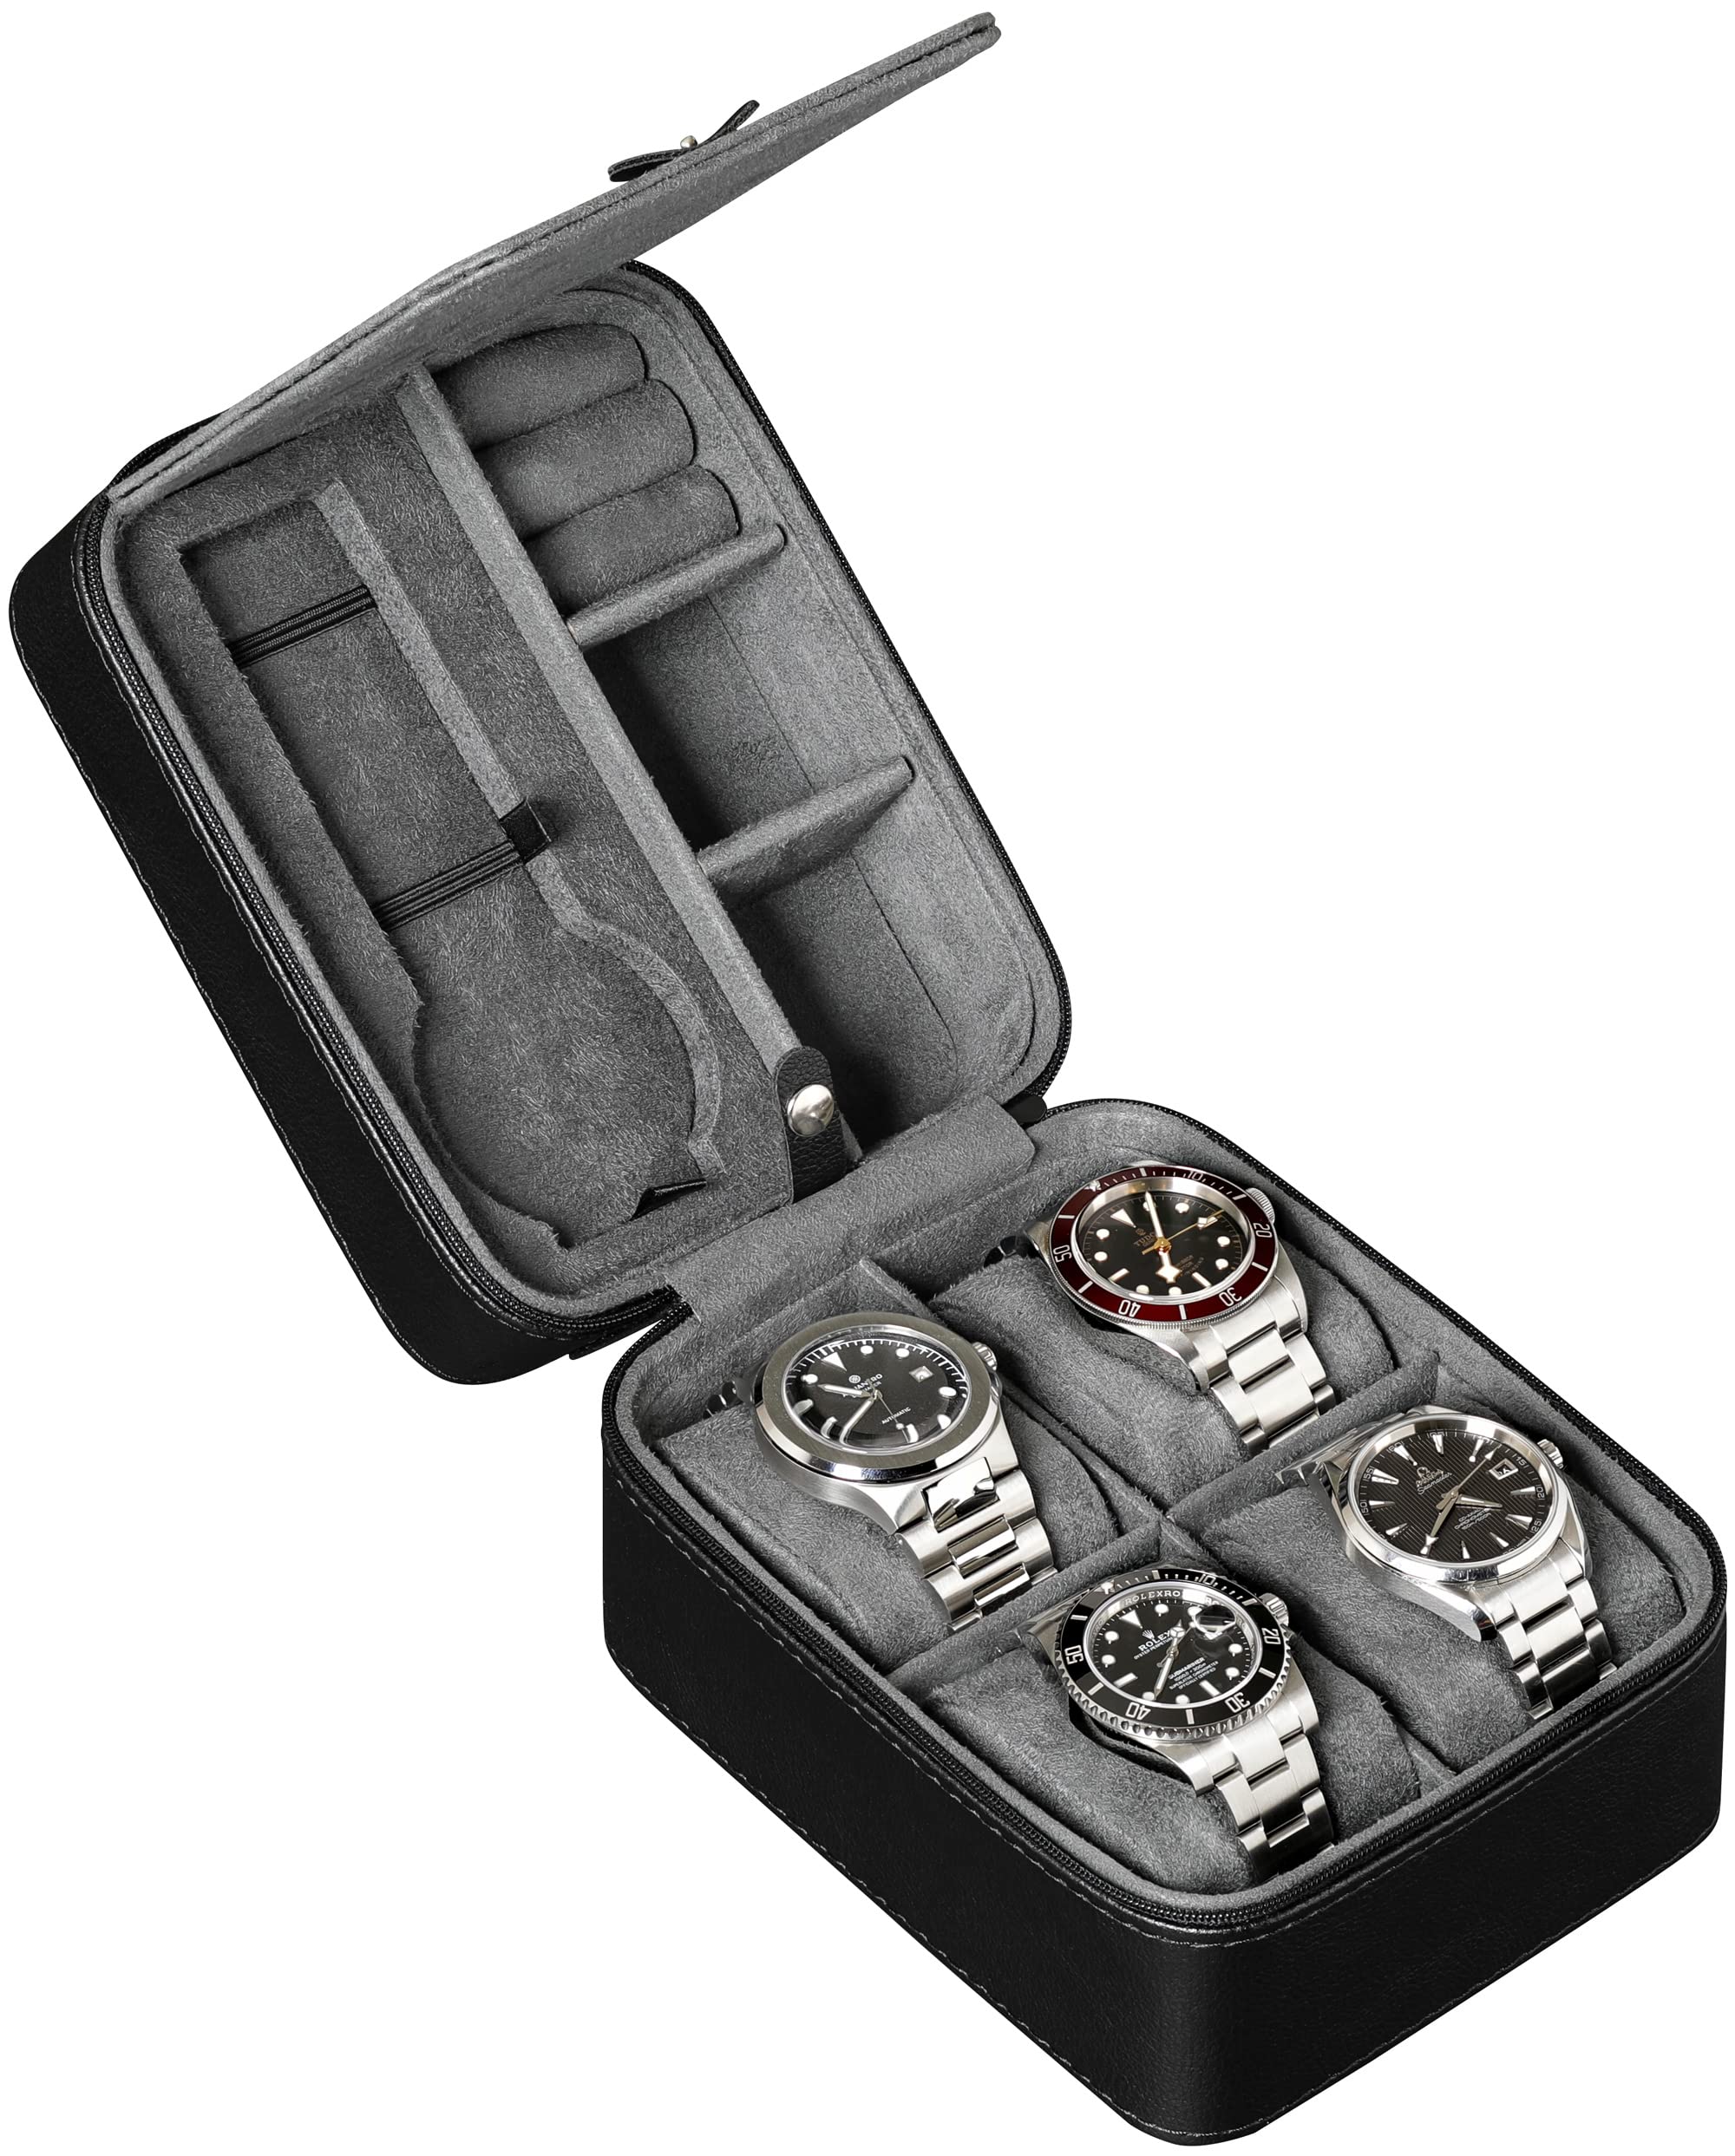 ROTHWELL Gift Set 6 Slot Leather Watch Box & Matching 5 Watch Travel Case - Luxury Watch Case Display Organizer, Locking Mens Jewelry Watches Holder, Men's Storage Boxes Glass Top Black/Grey